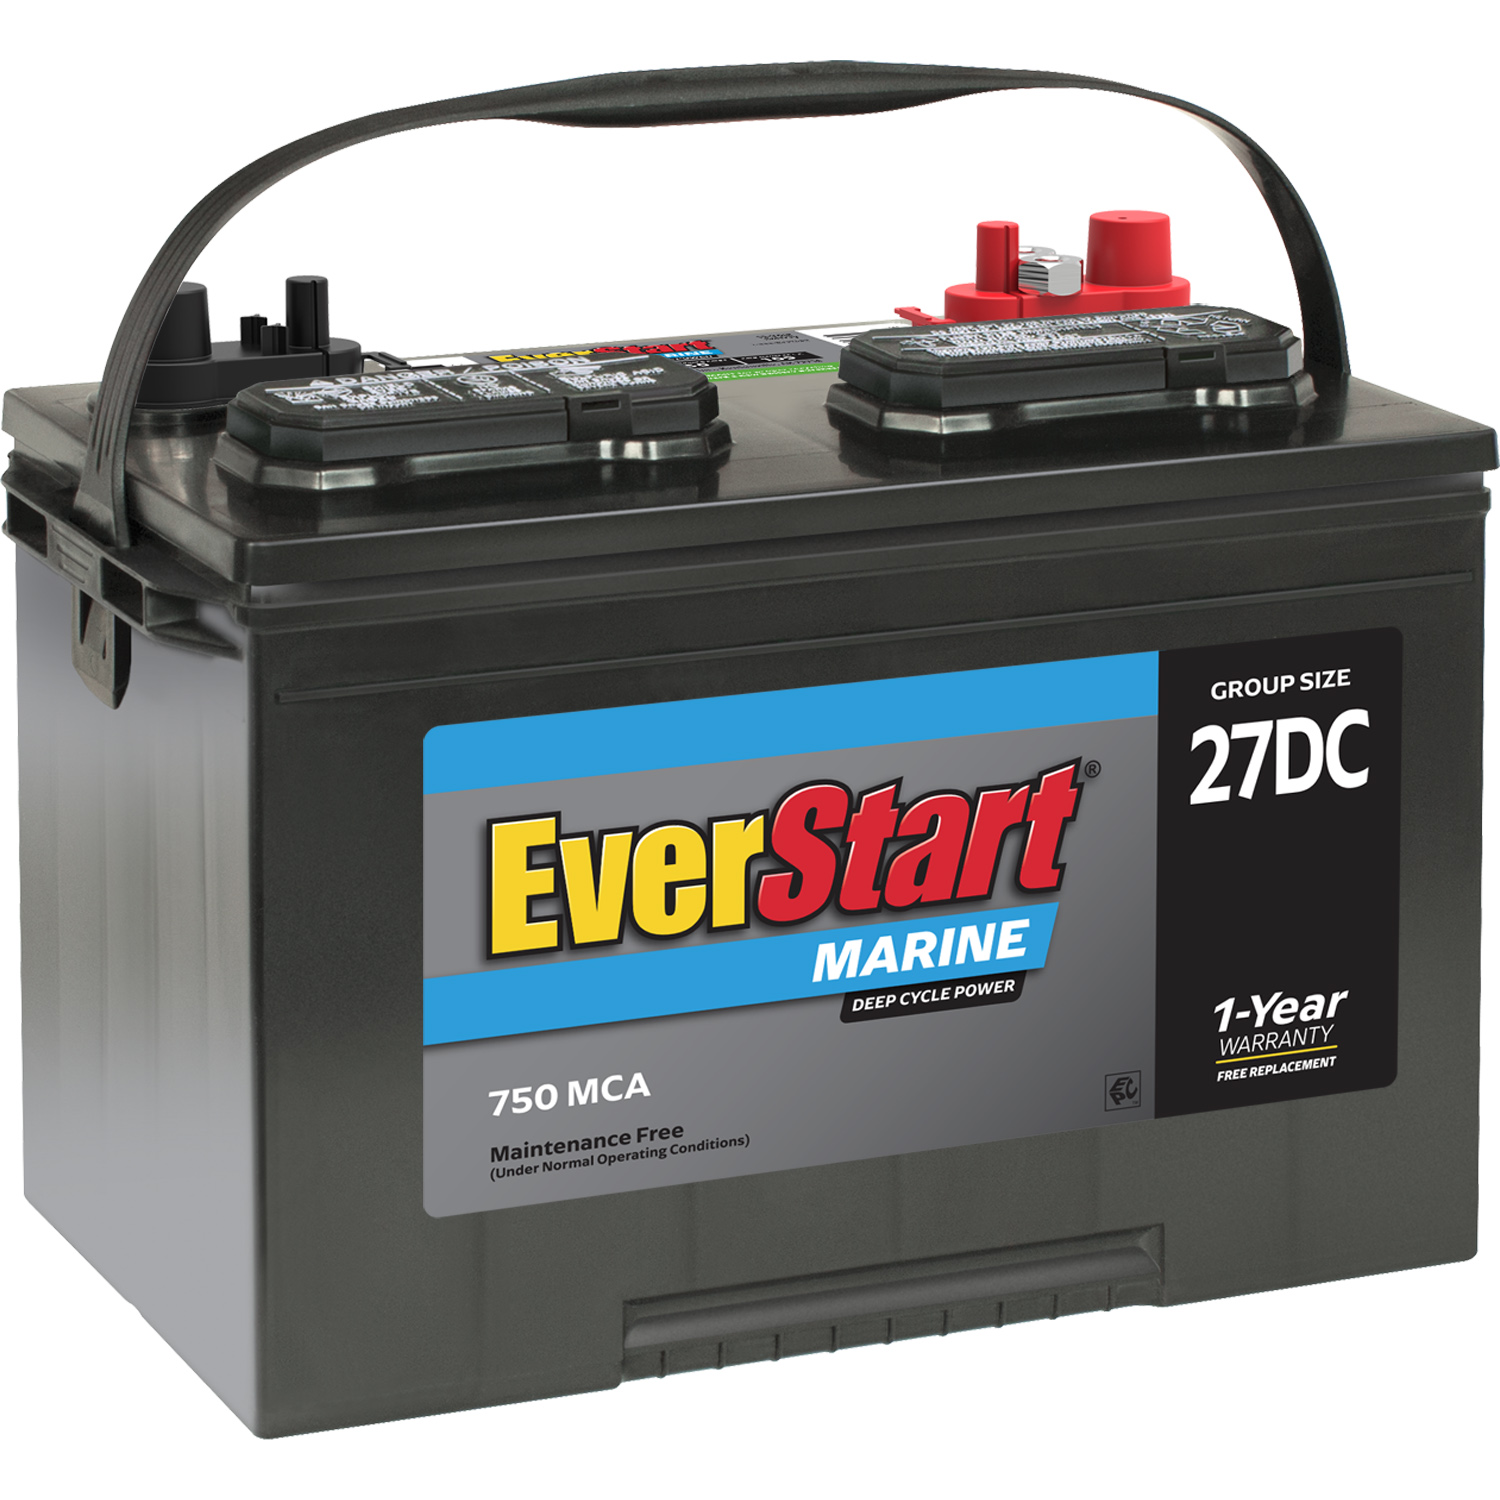 EverStart Lead Acid Marine & RV Deep Cycle Battery, Group Size 27DC 12 Volt, 750 MCA - image 1 of 7